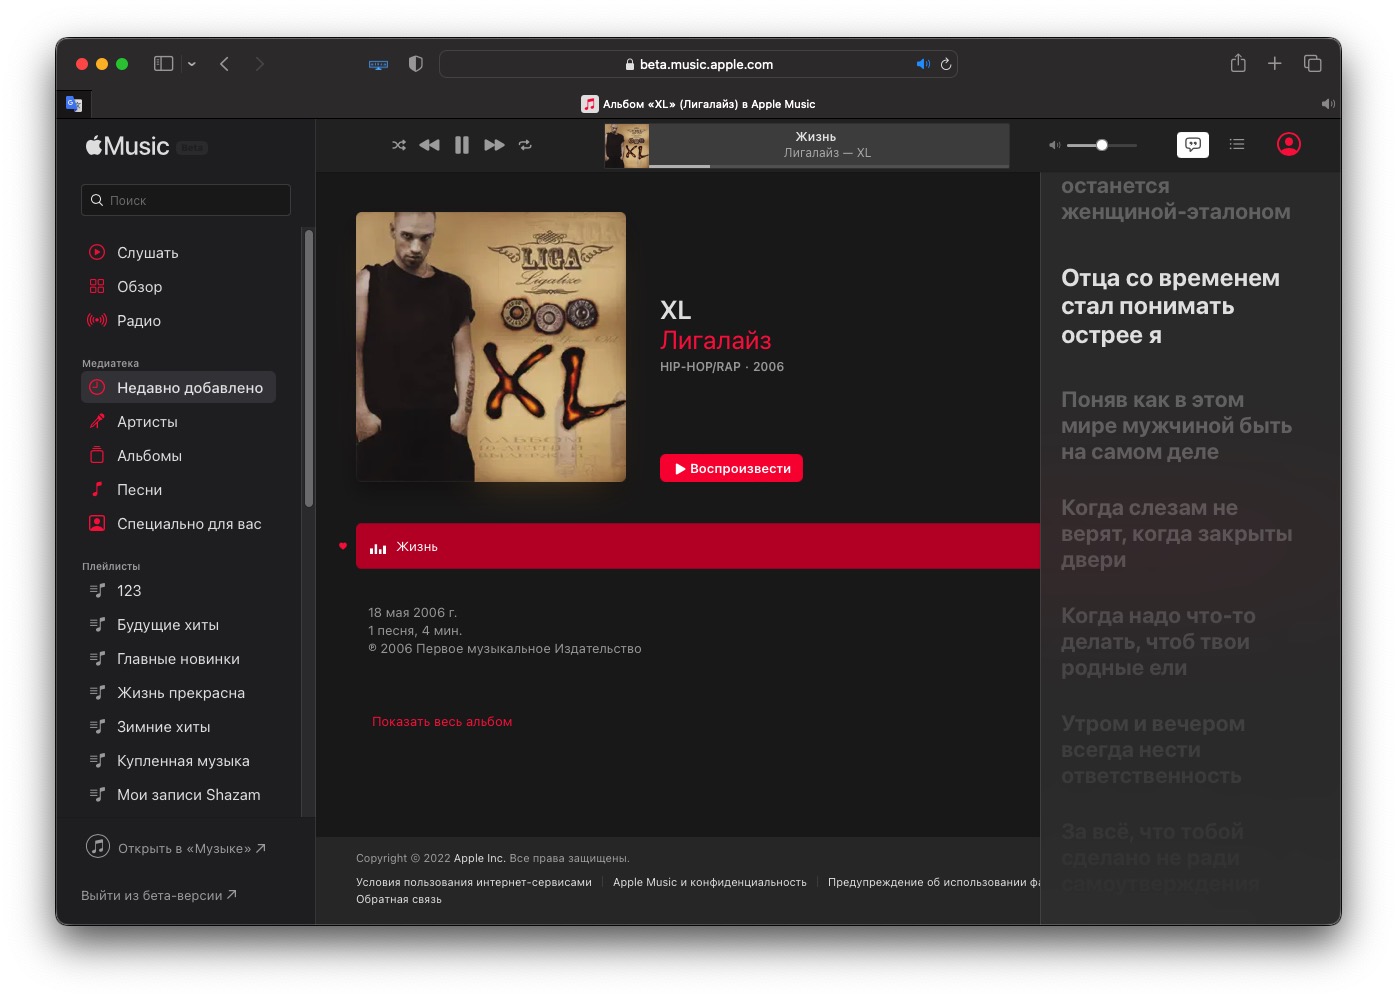 Веб-версия Apple Music скоро получит режим караоке